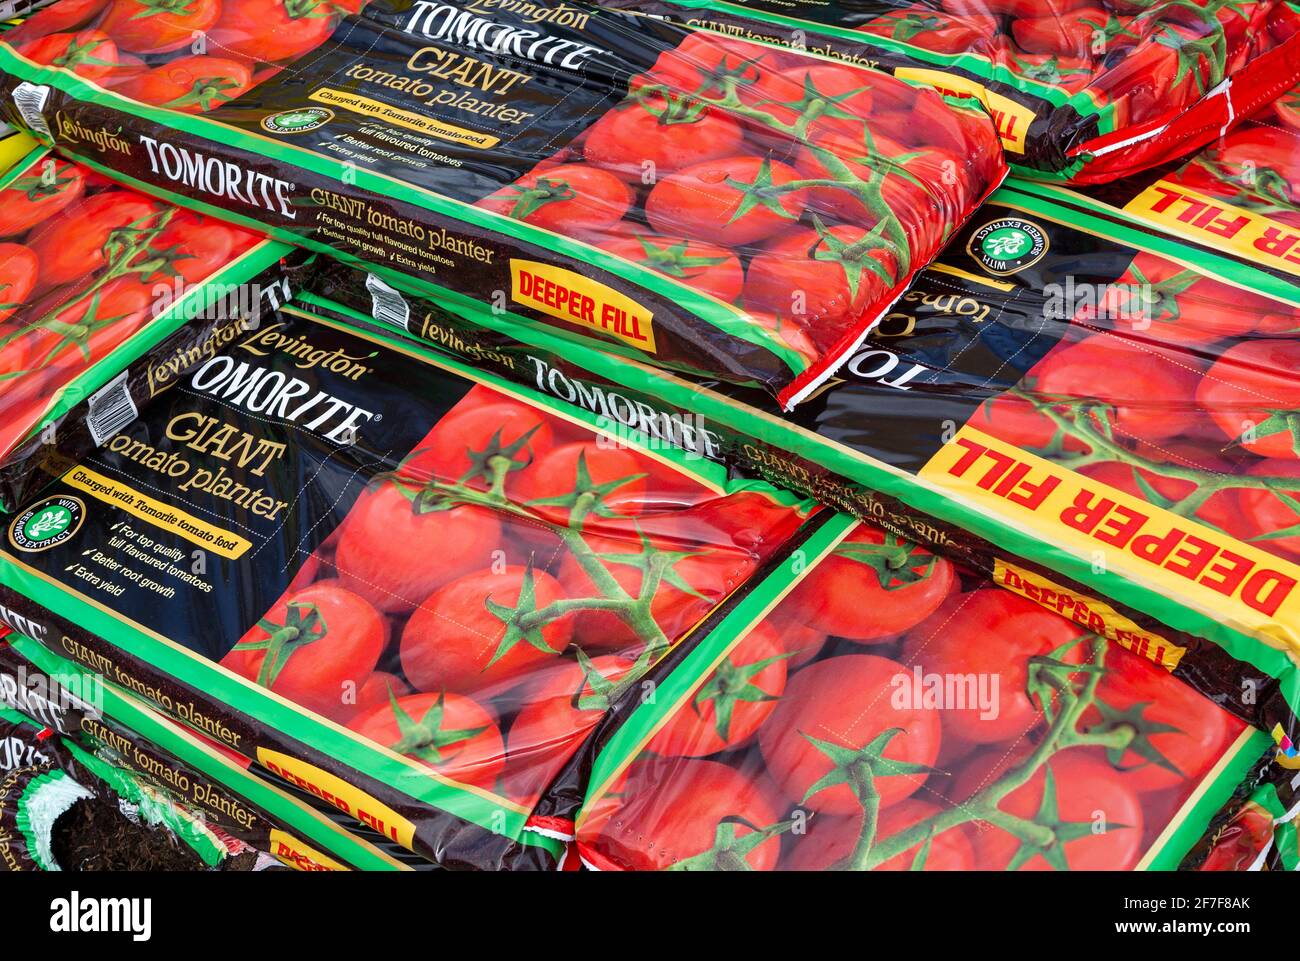 Bags of Levington Tomorite giant tomato planter grow bags stacked up, UK Stock Photo